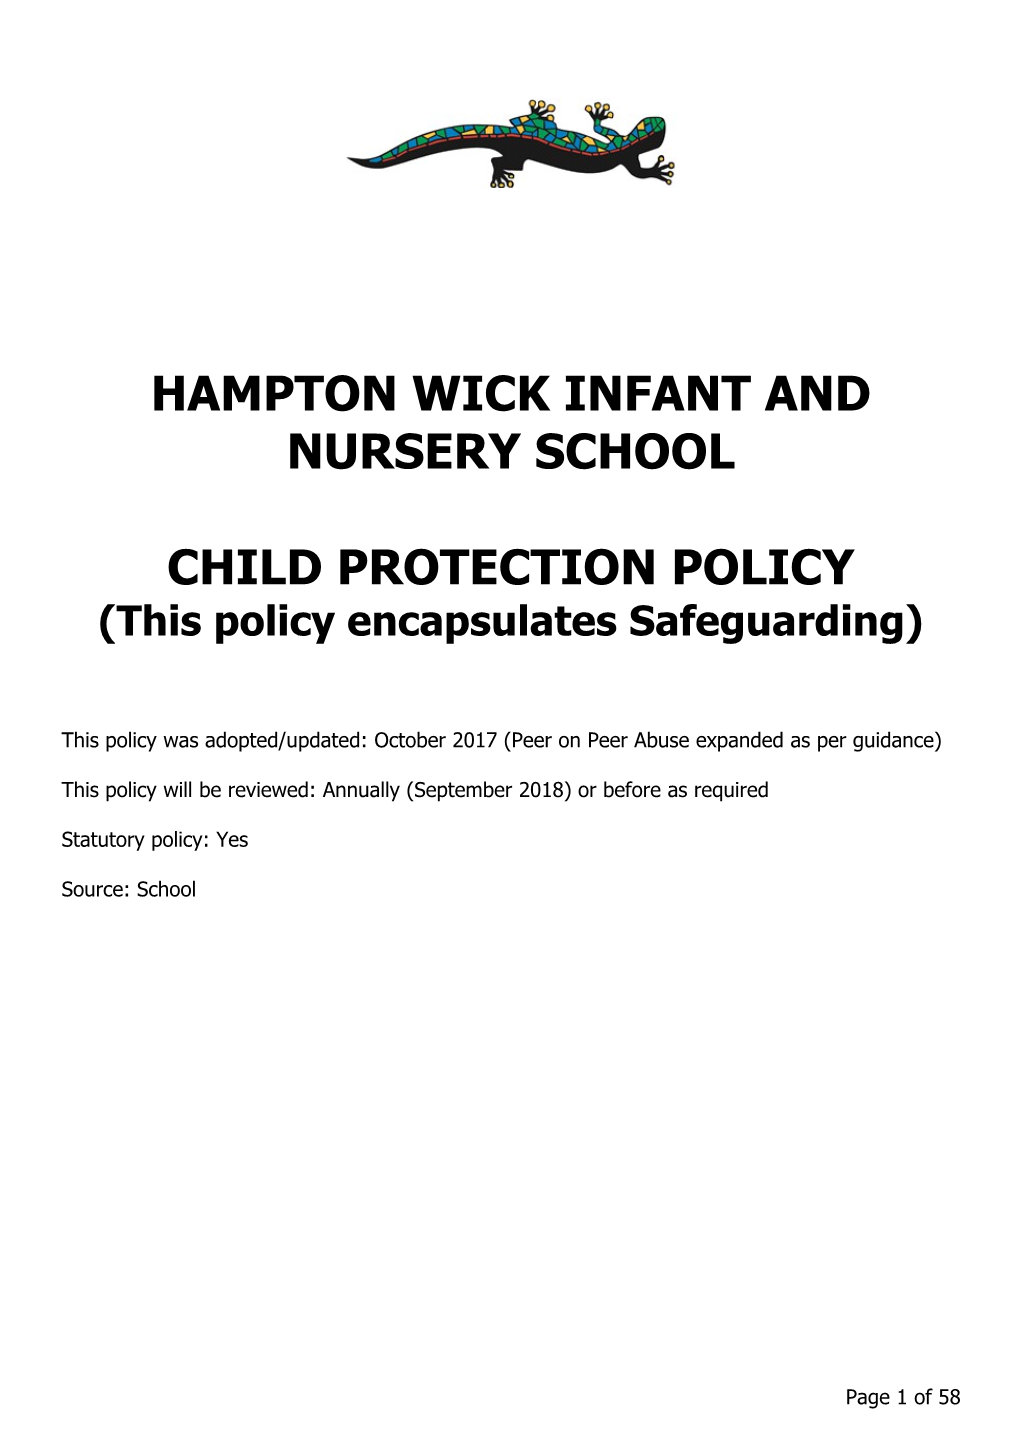 Hampton Wick Infant and Nursery School